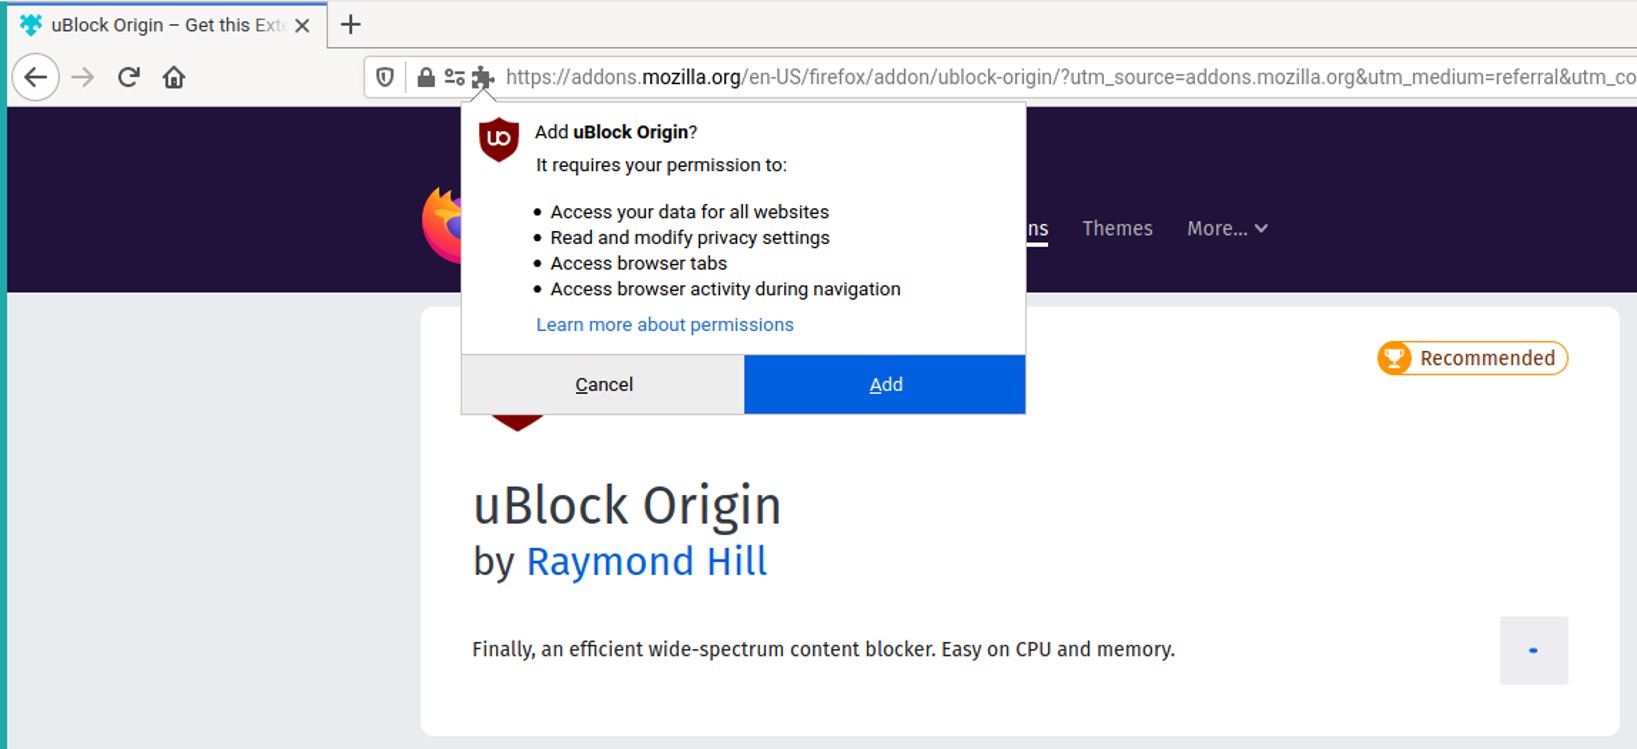 How To Install Ublock Origin On Firefox